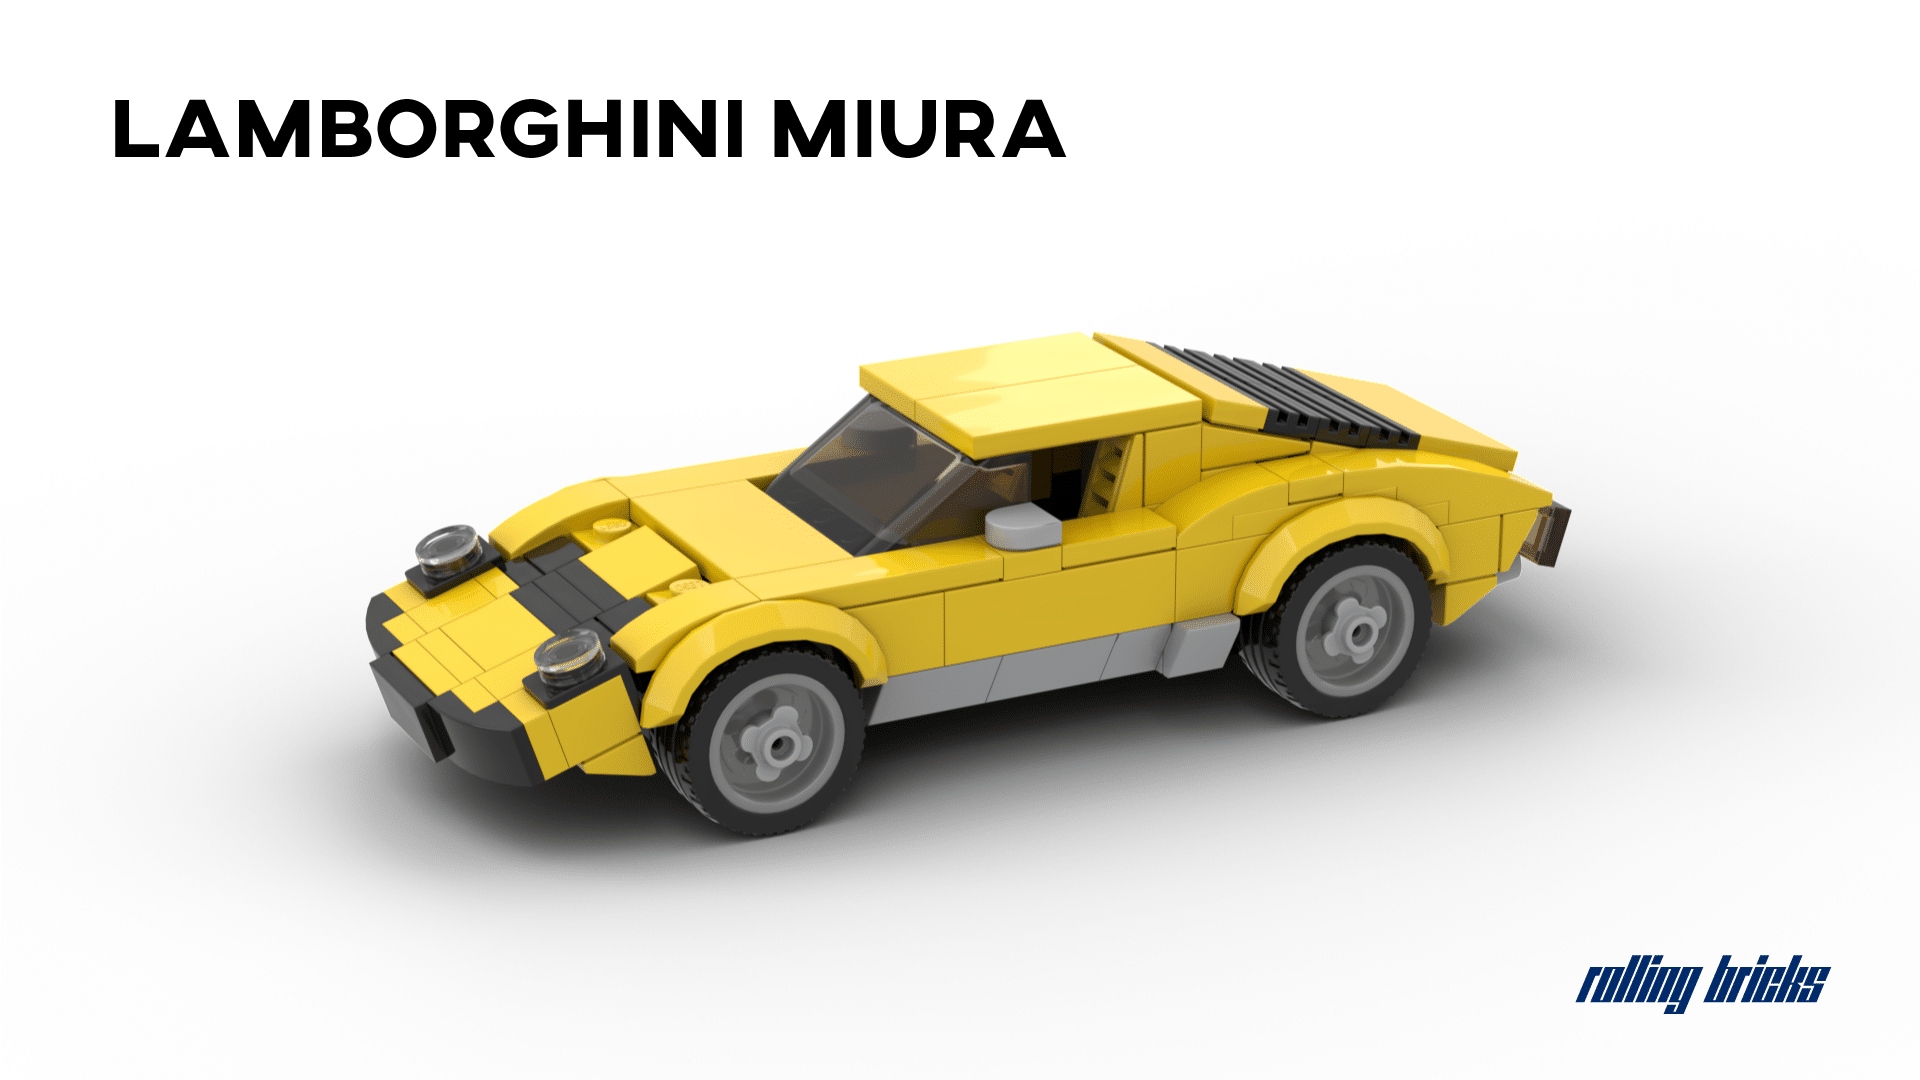 lego instructions Lamborghini miura